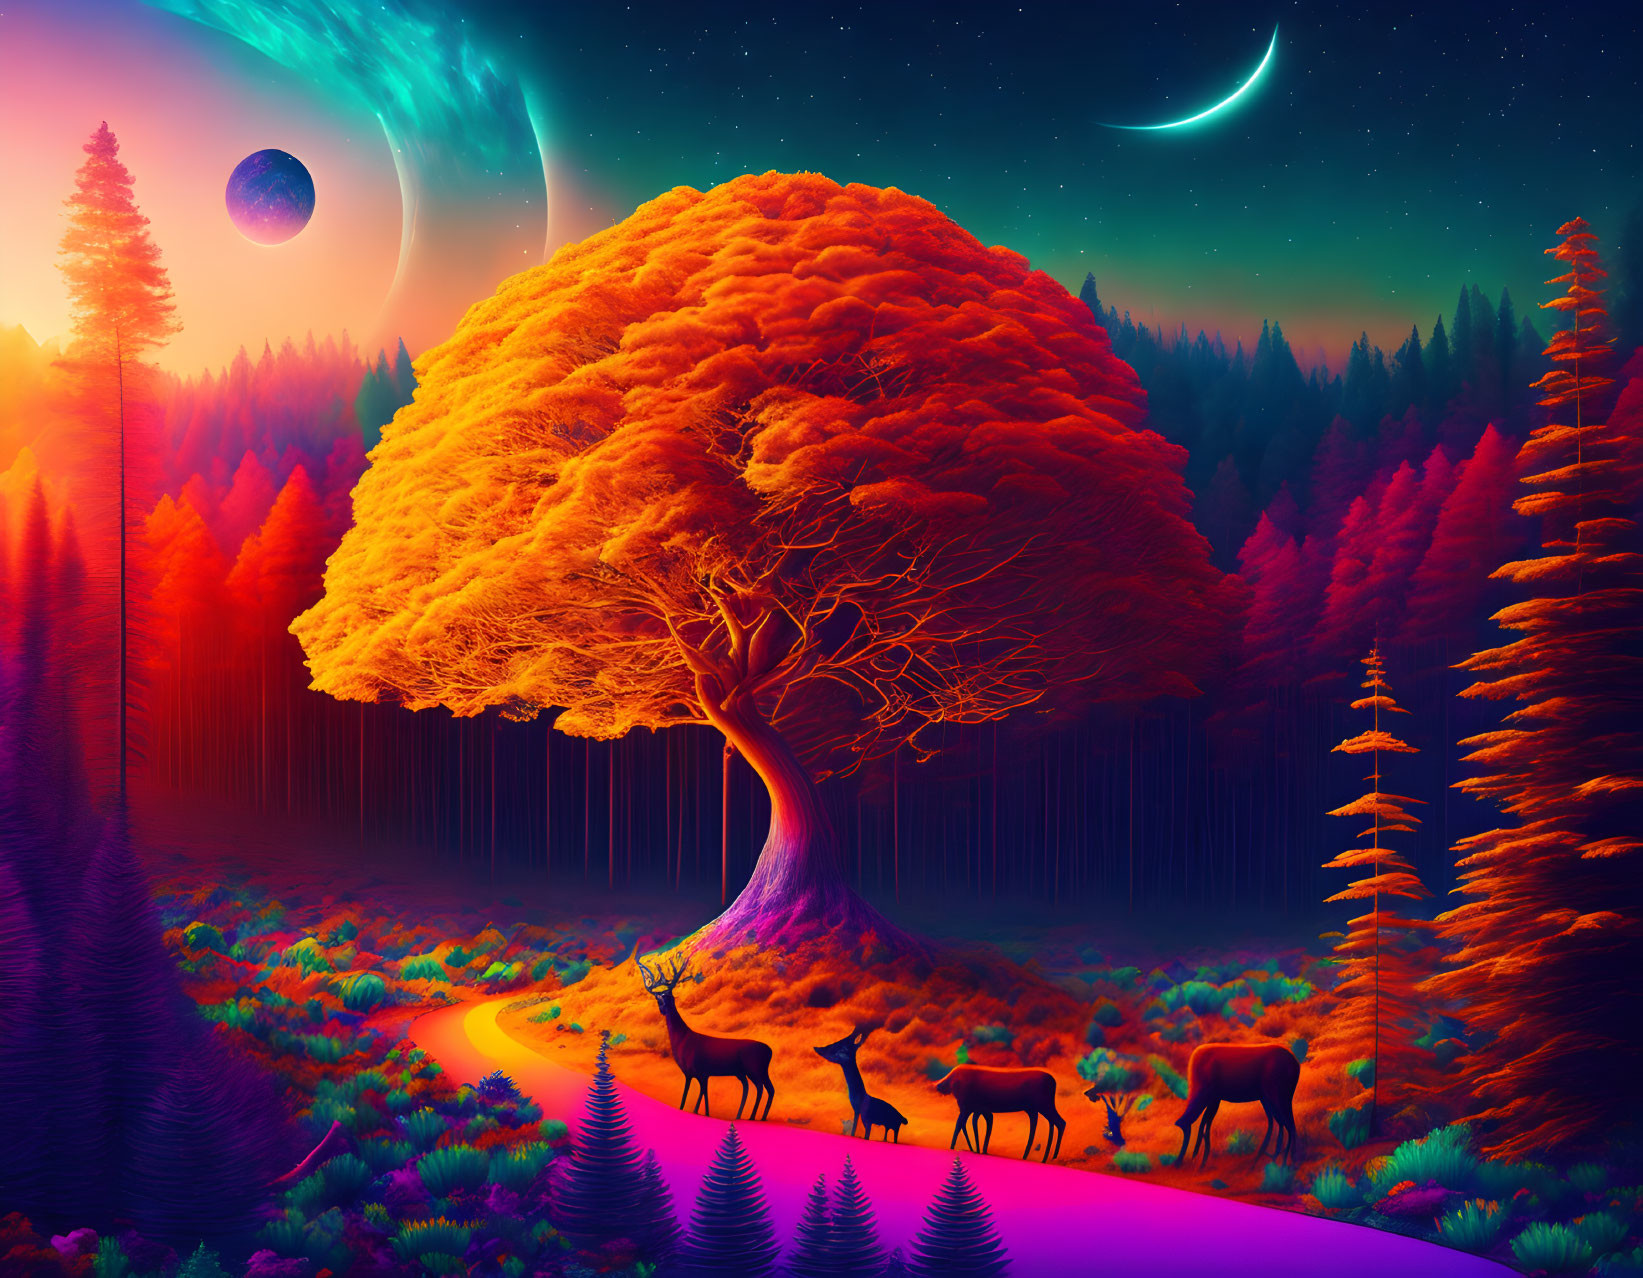 Colorful Twilight Fantasy Landscape with Orange Tree, Deer, Purple Path, Starry Sky, Crescent Moon